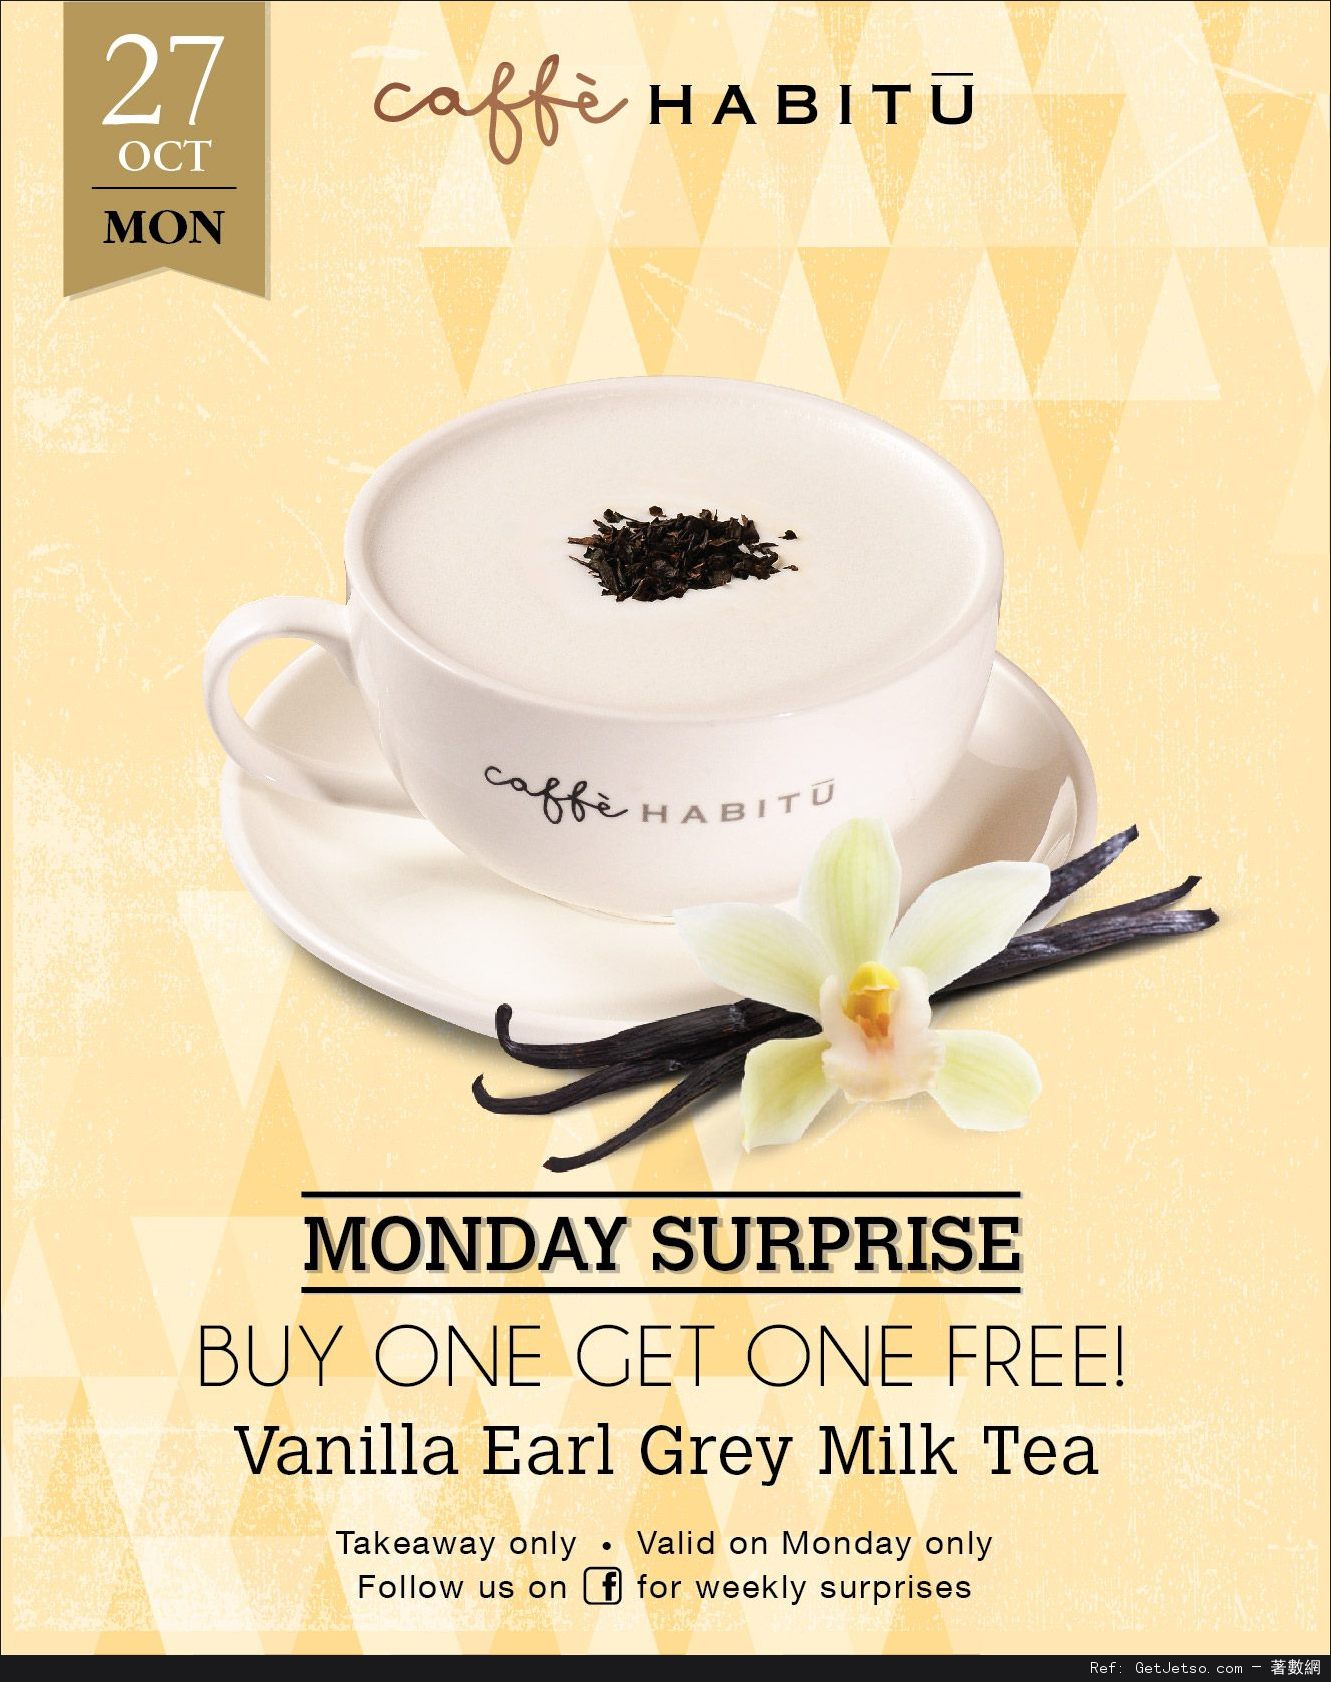 Caffe HABITU Vanilla Earl Grey Milk Tea 買1送1優惠(14年10月27日)圖片1